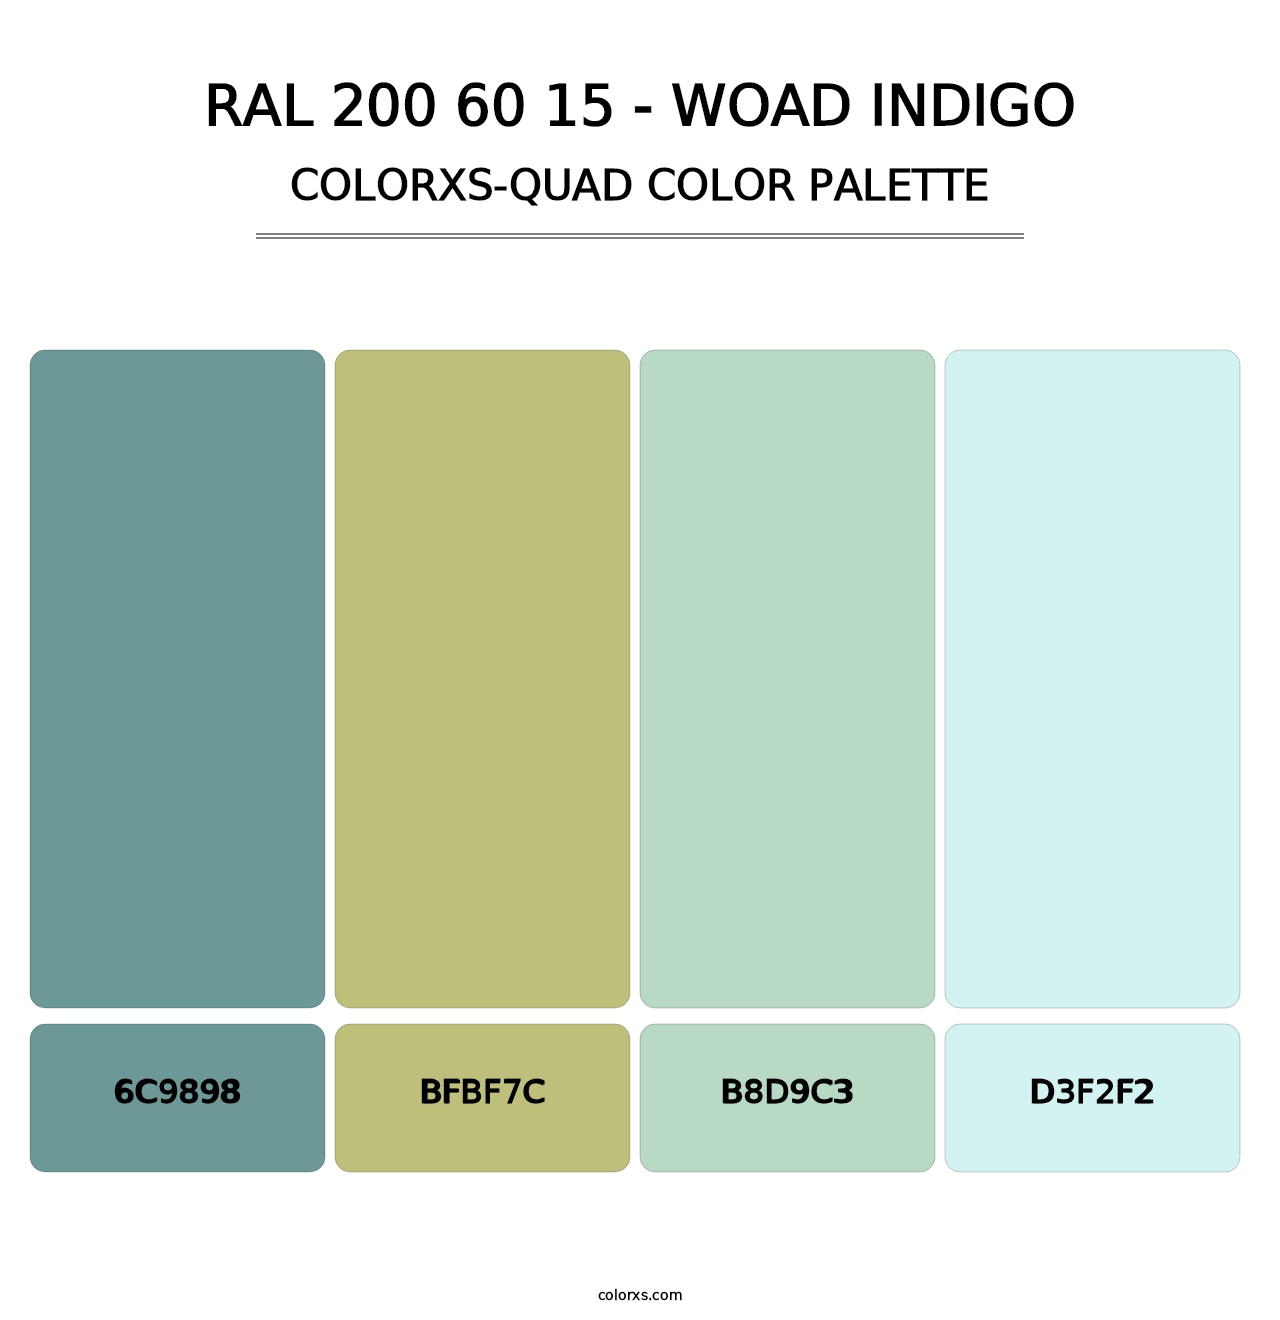 RAL 200 60 15 - Woad Indigo - Colorxs Quad Palette